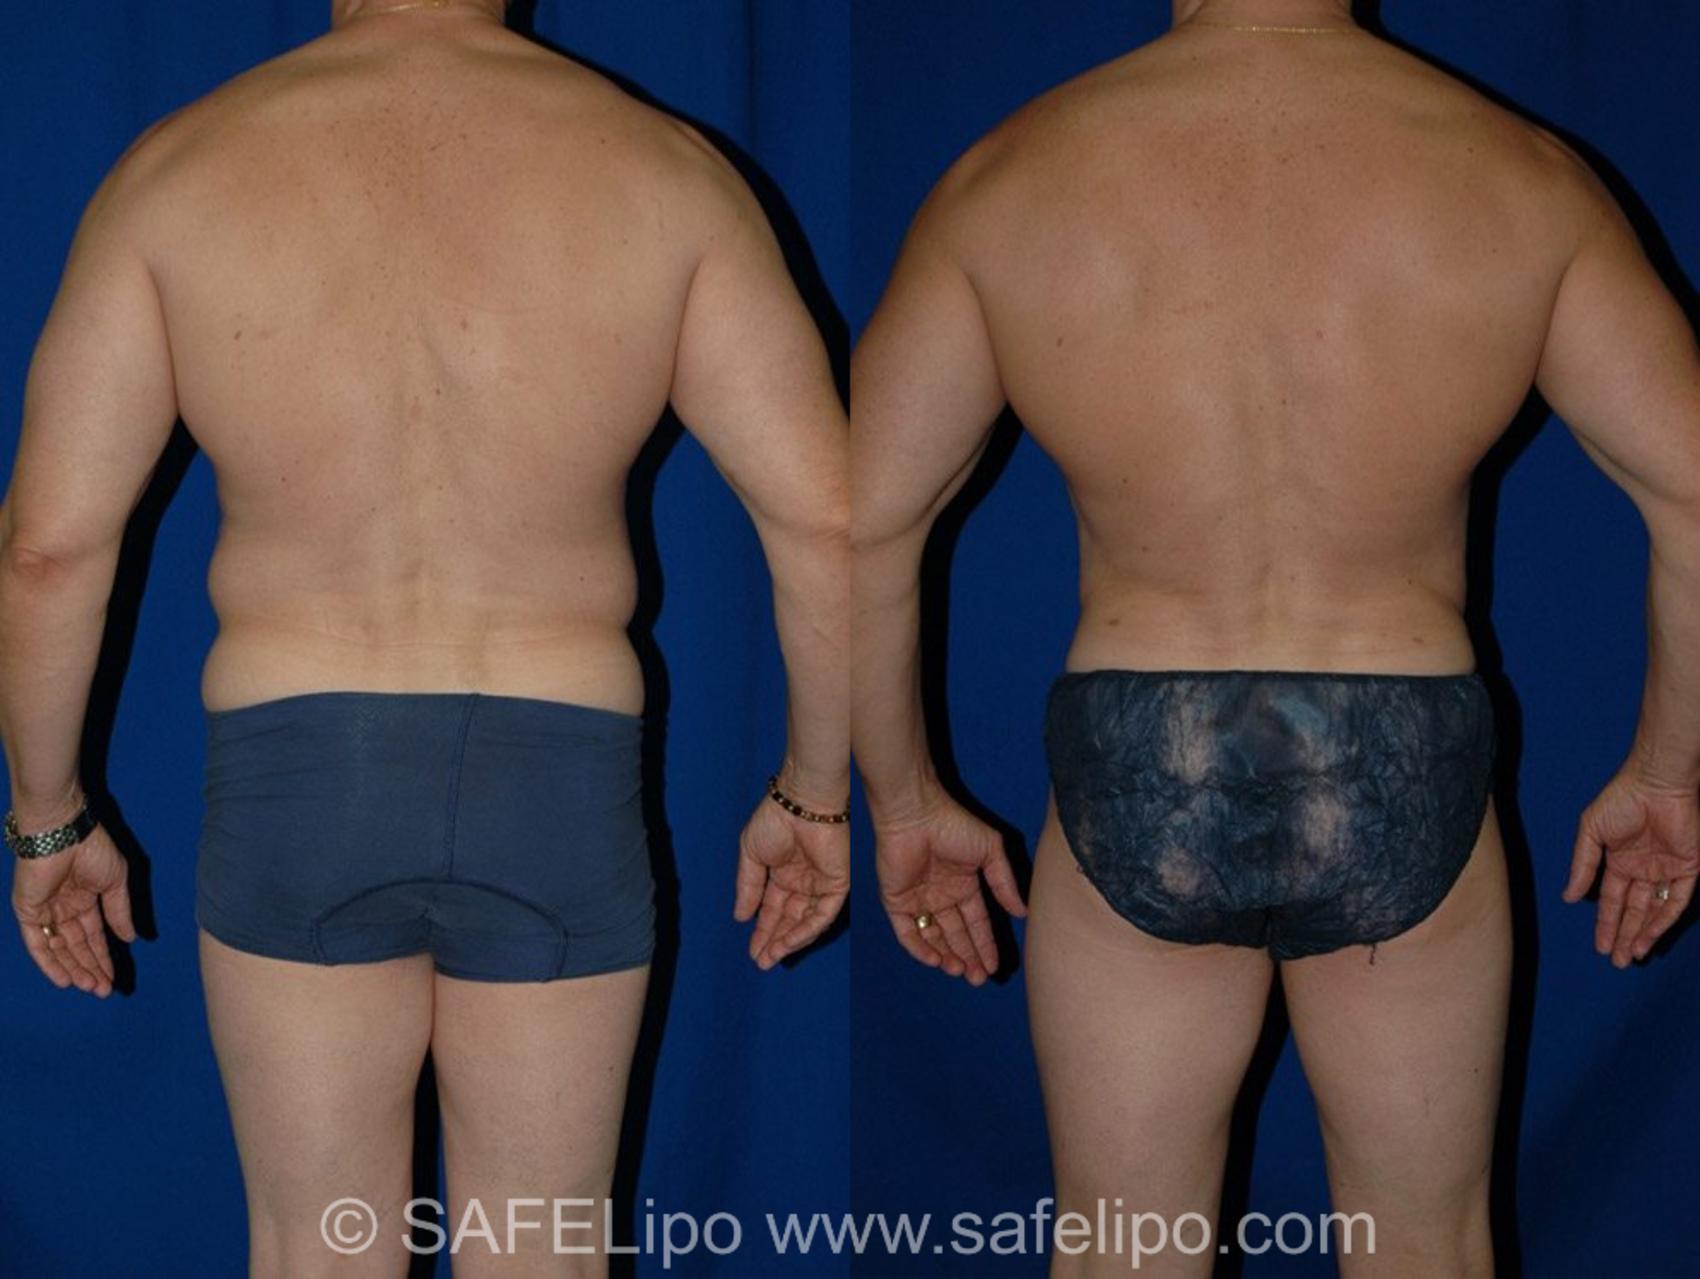 SAFELipoHD® Case 12 Before & After View #4 | SAFELipo®